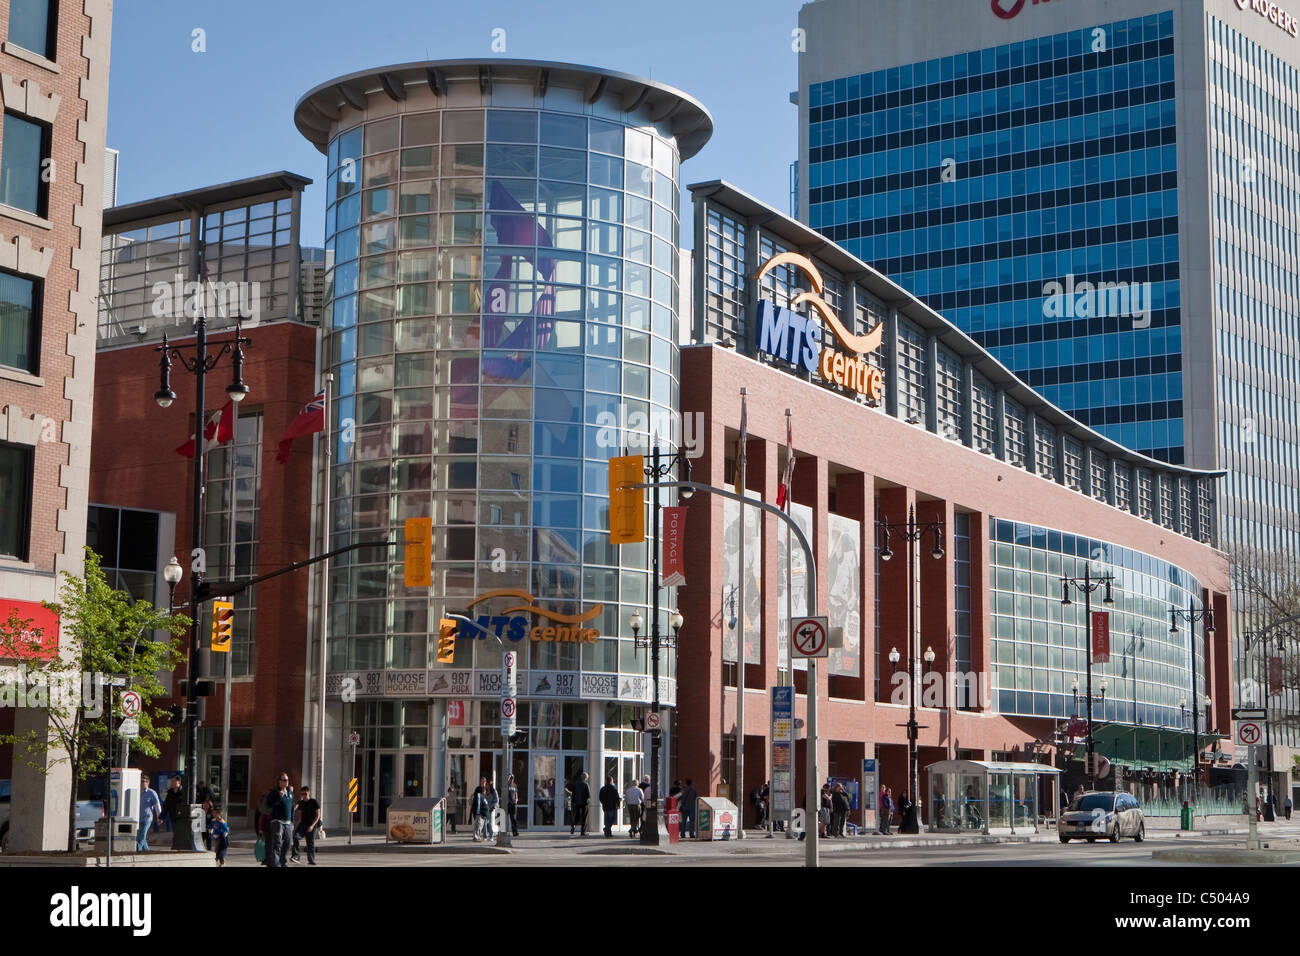 The MTS Centre is seen in Winnipeg Stock Photo